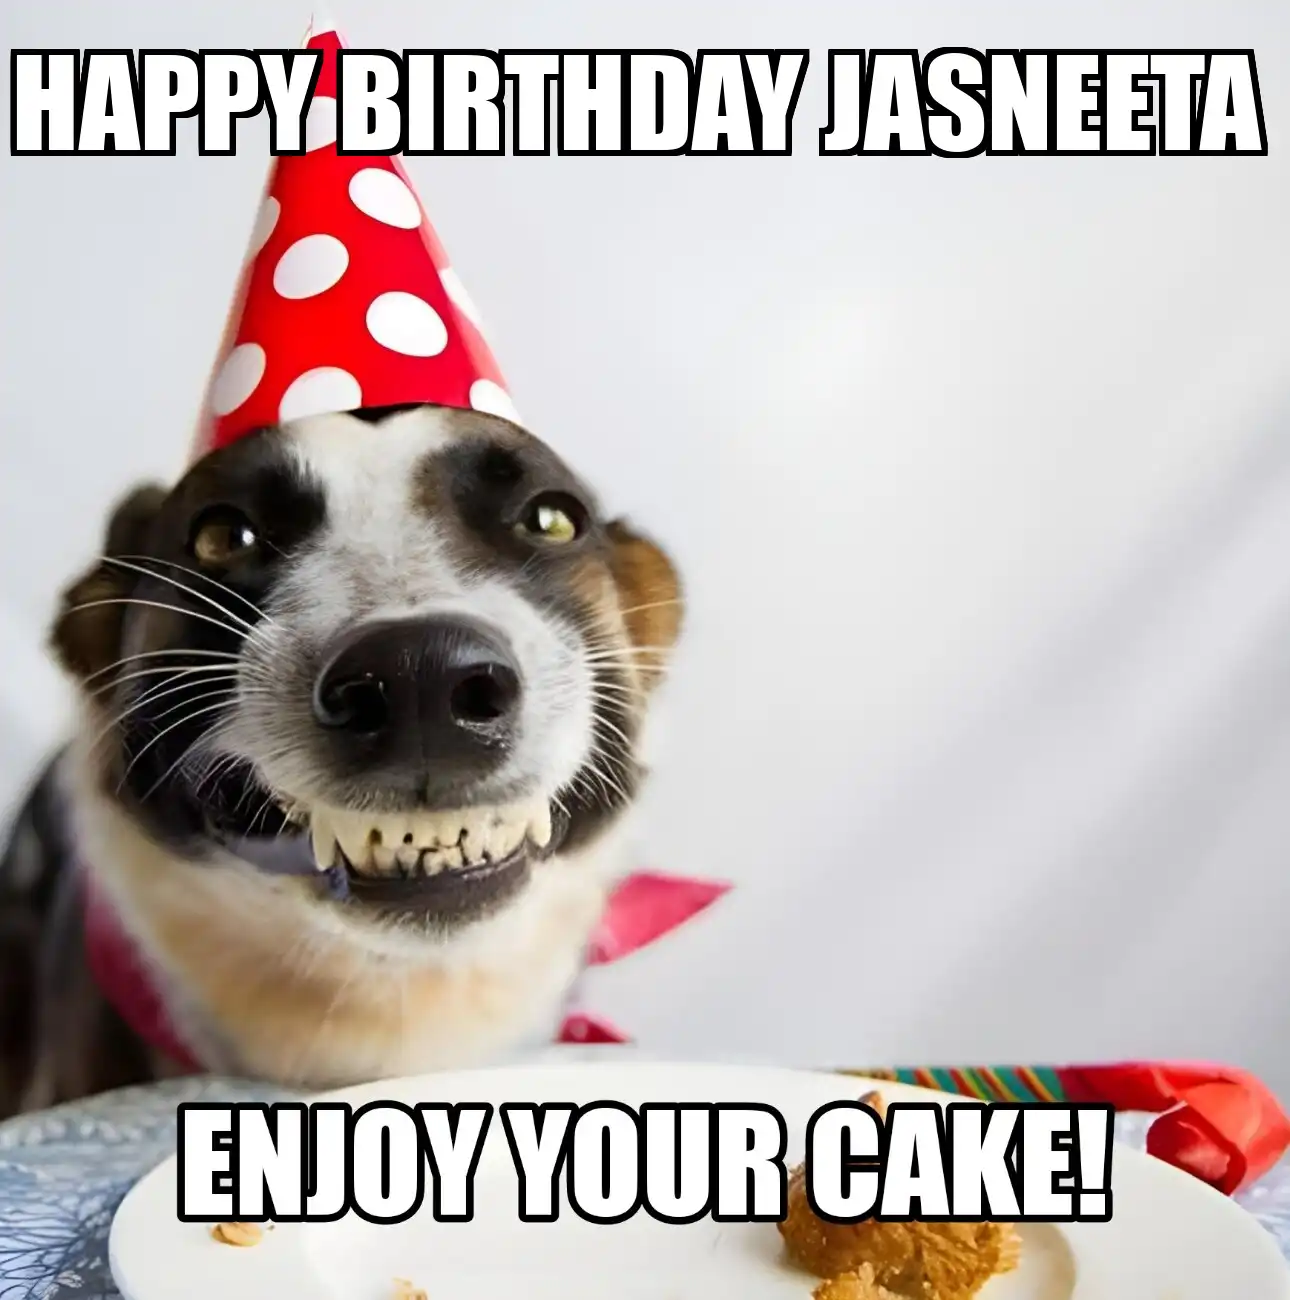 Happy Birthday Jasneeta Enjoy Your Cake Dog Meme